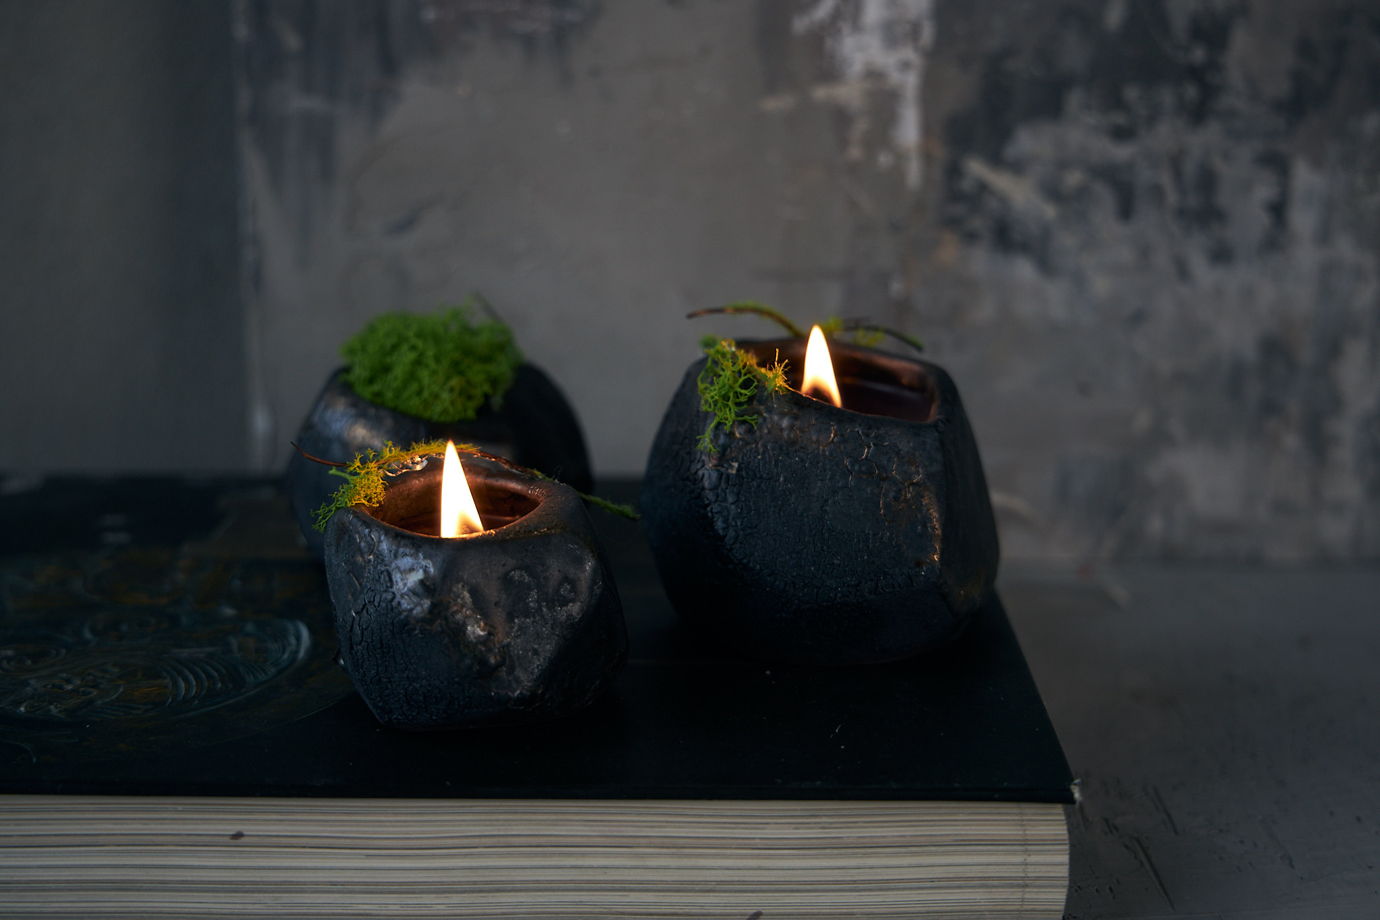 Камни - свечи из коллекции "Камчатка"